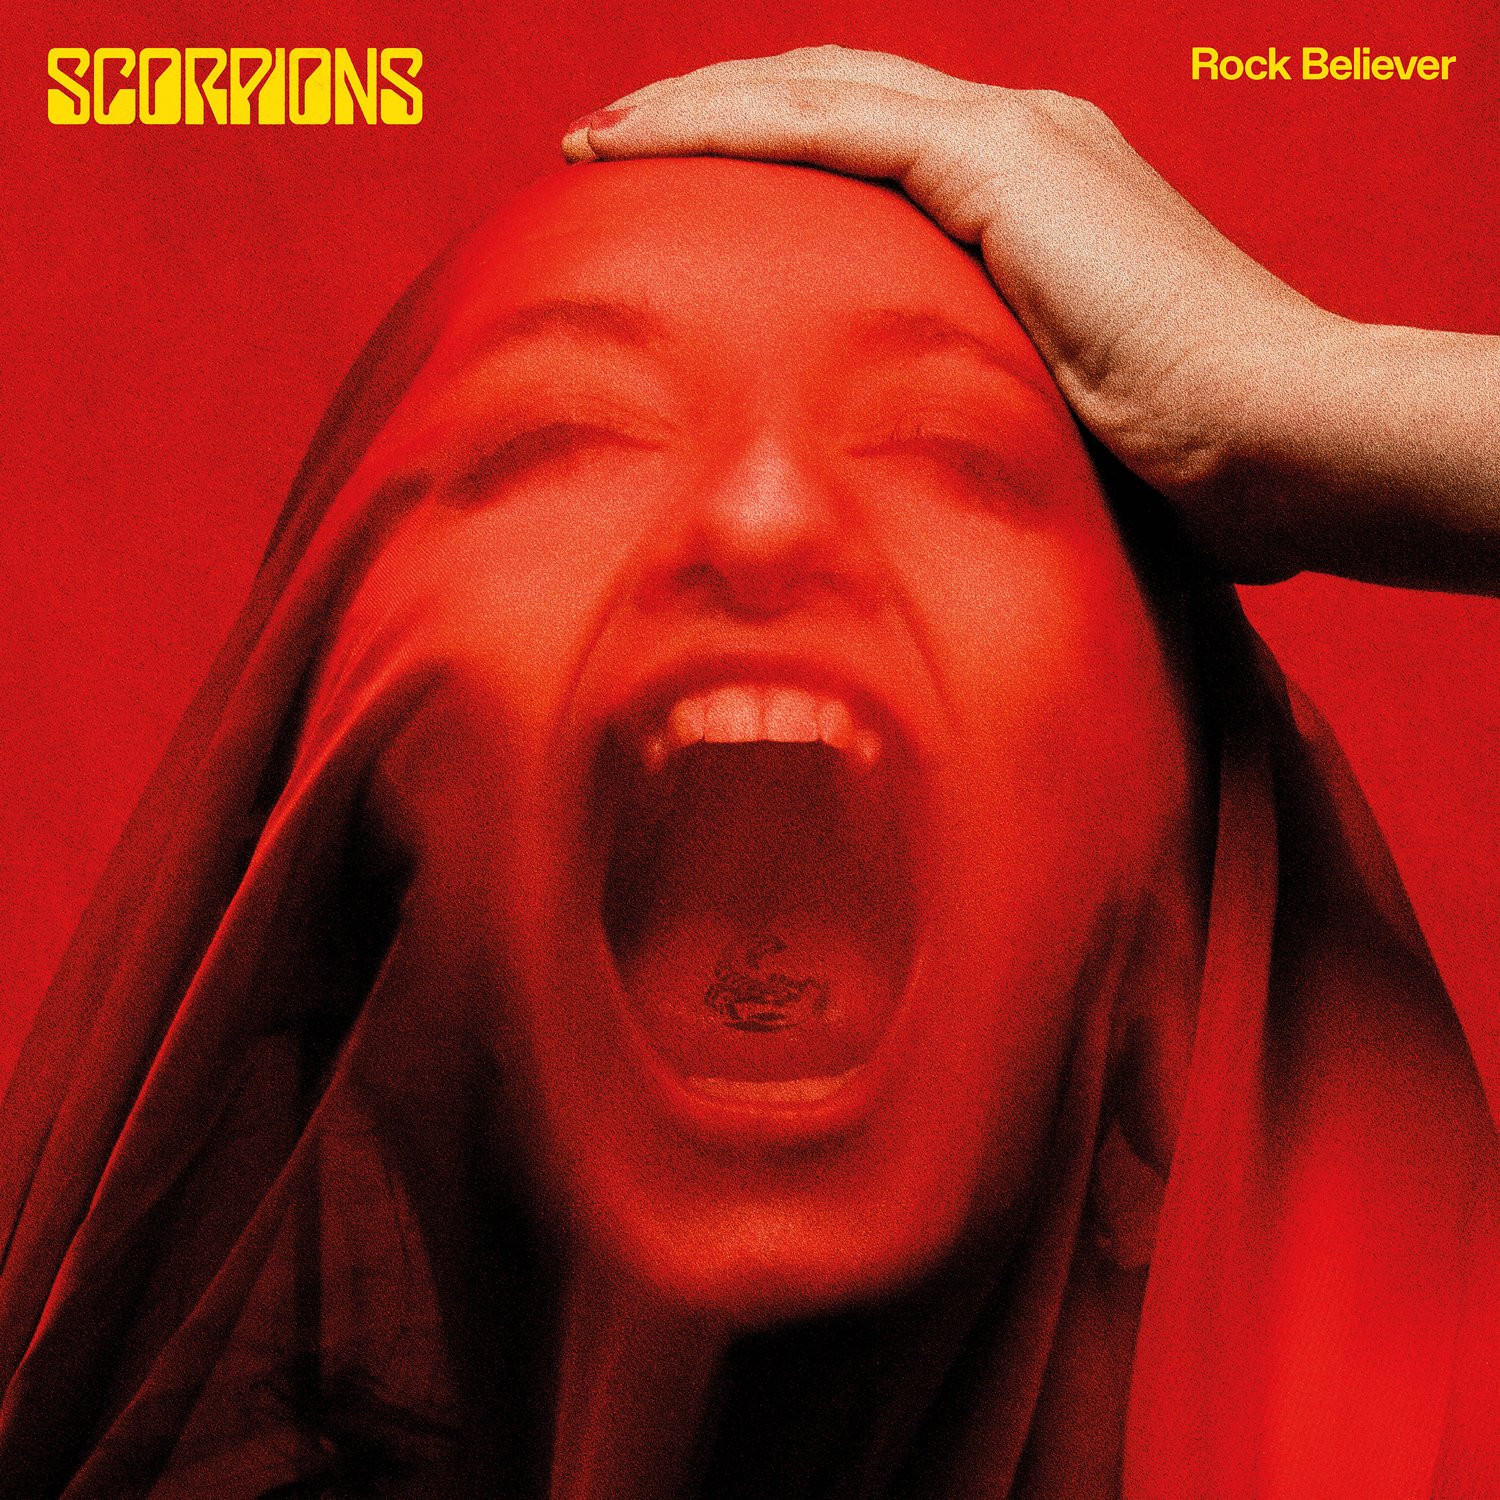 Scorpions-Rock Believer.jpg